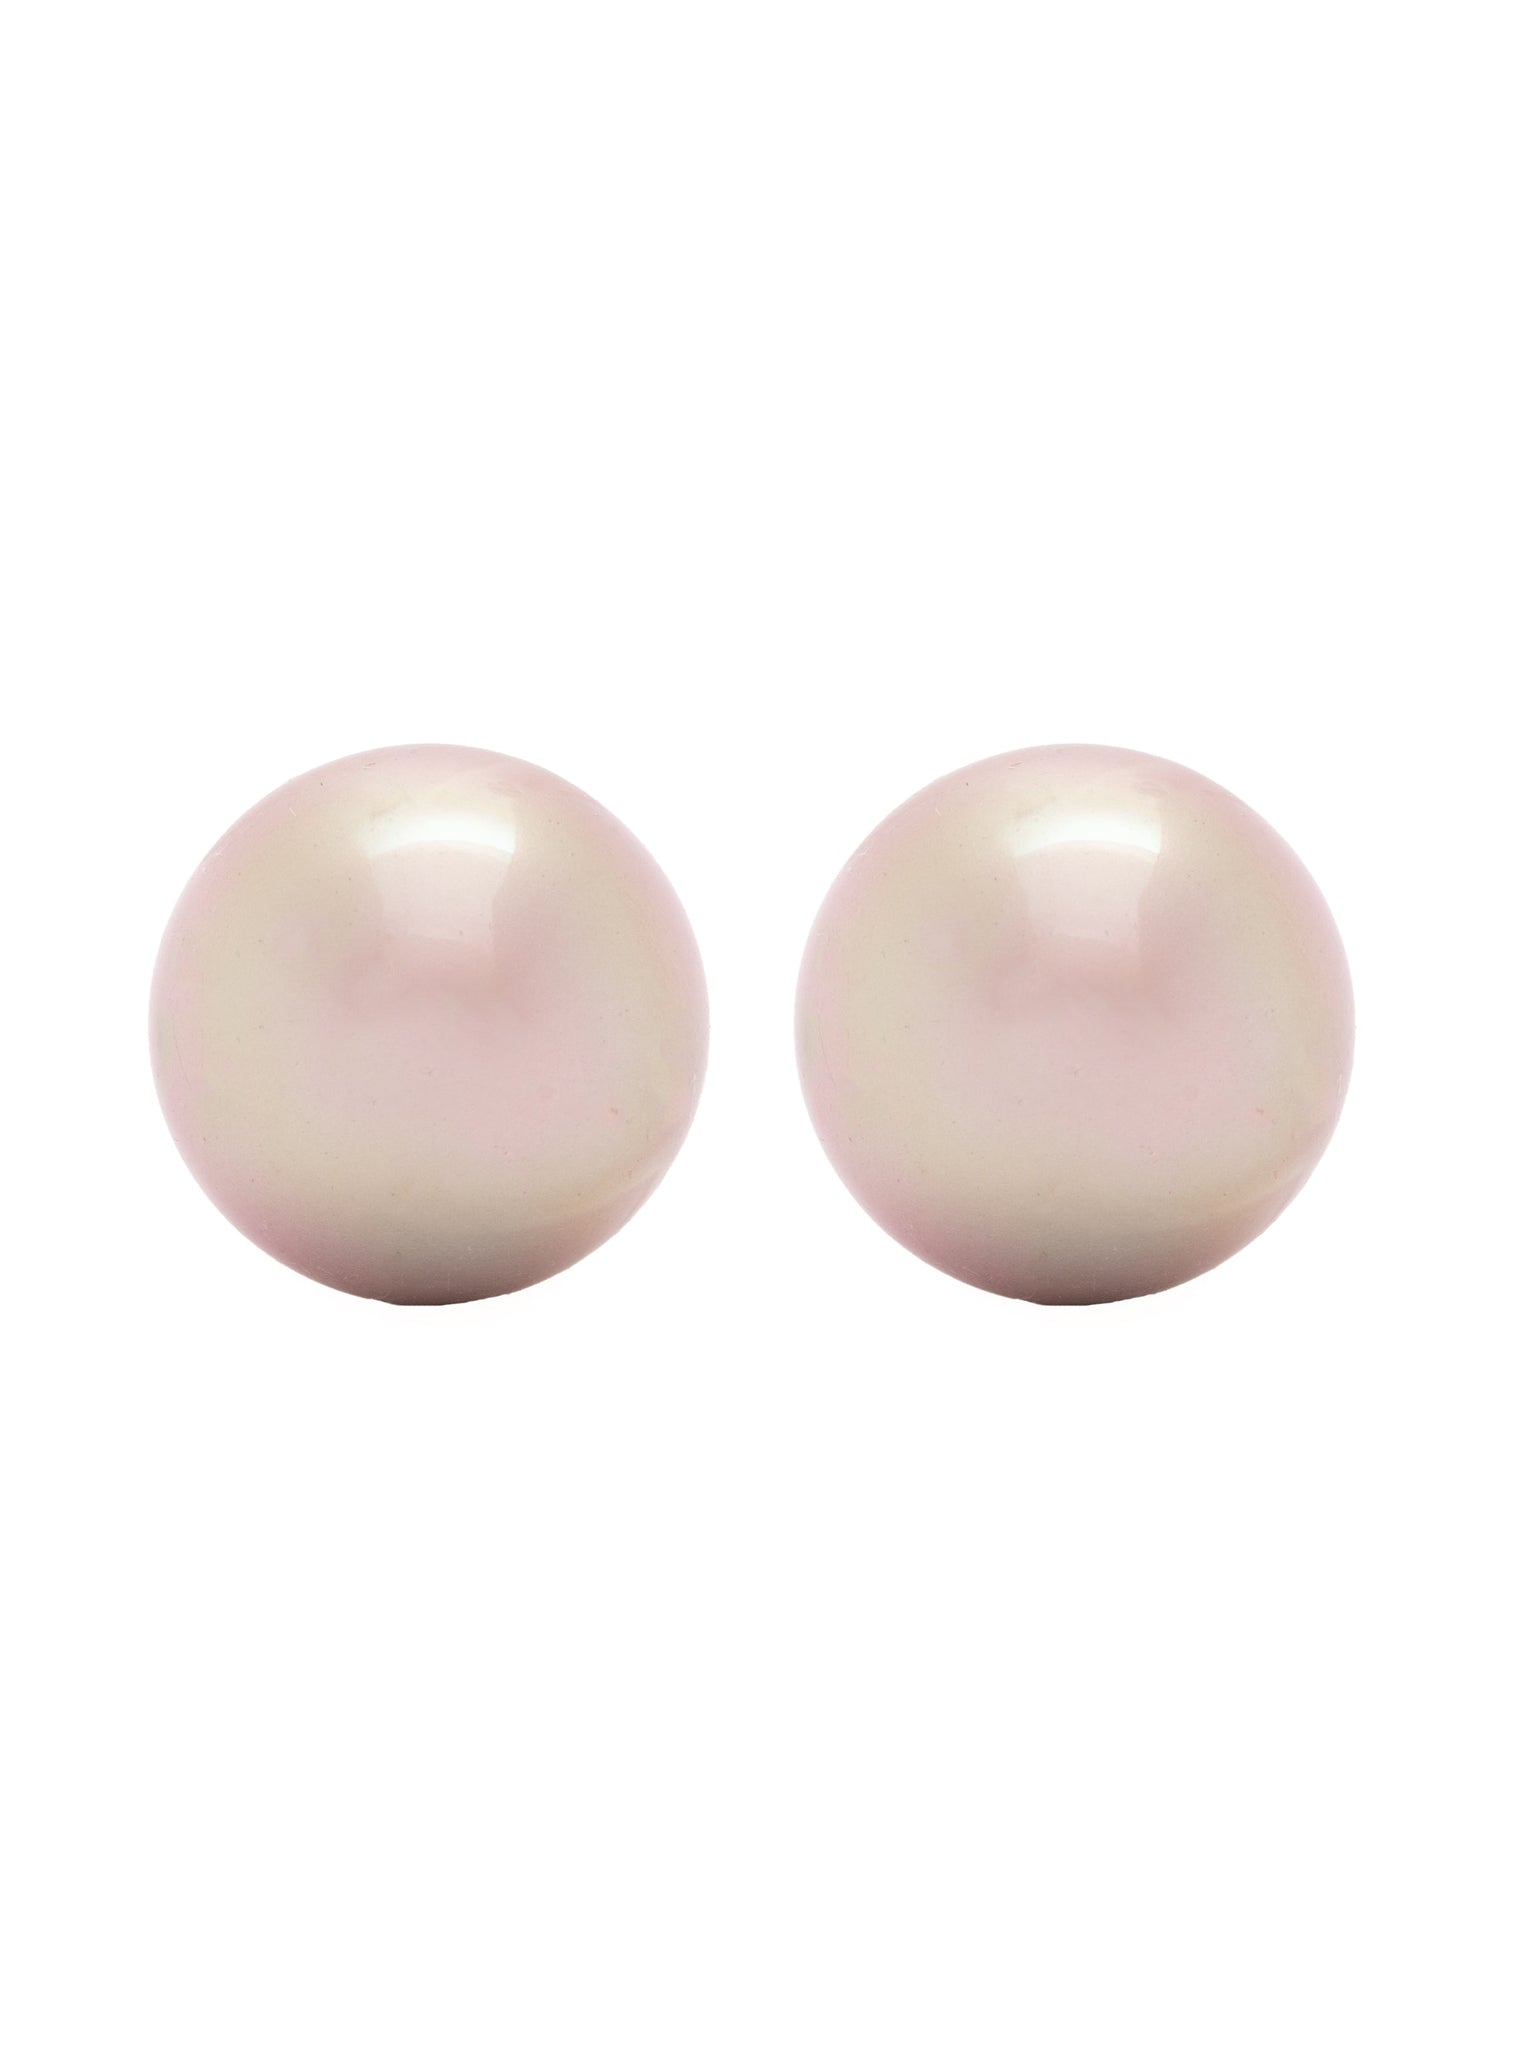 The Pearl Story - Champagne Pearl Stud Earrings 